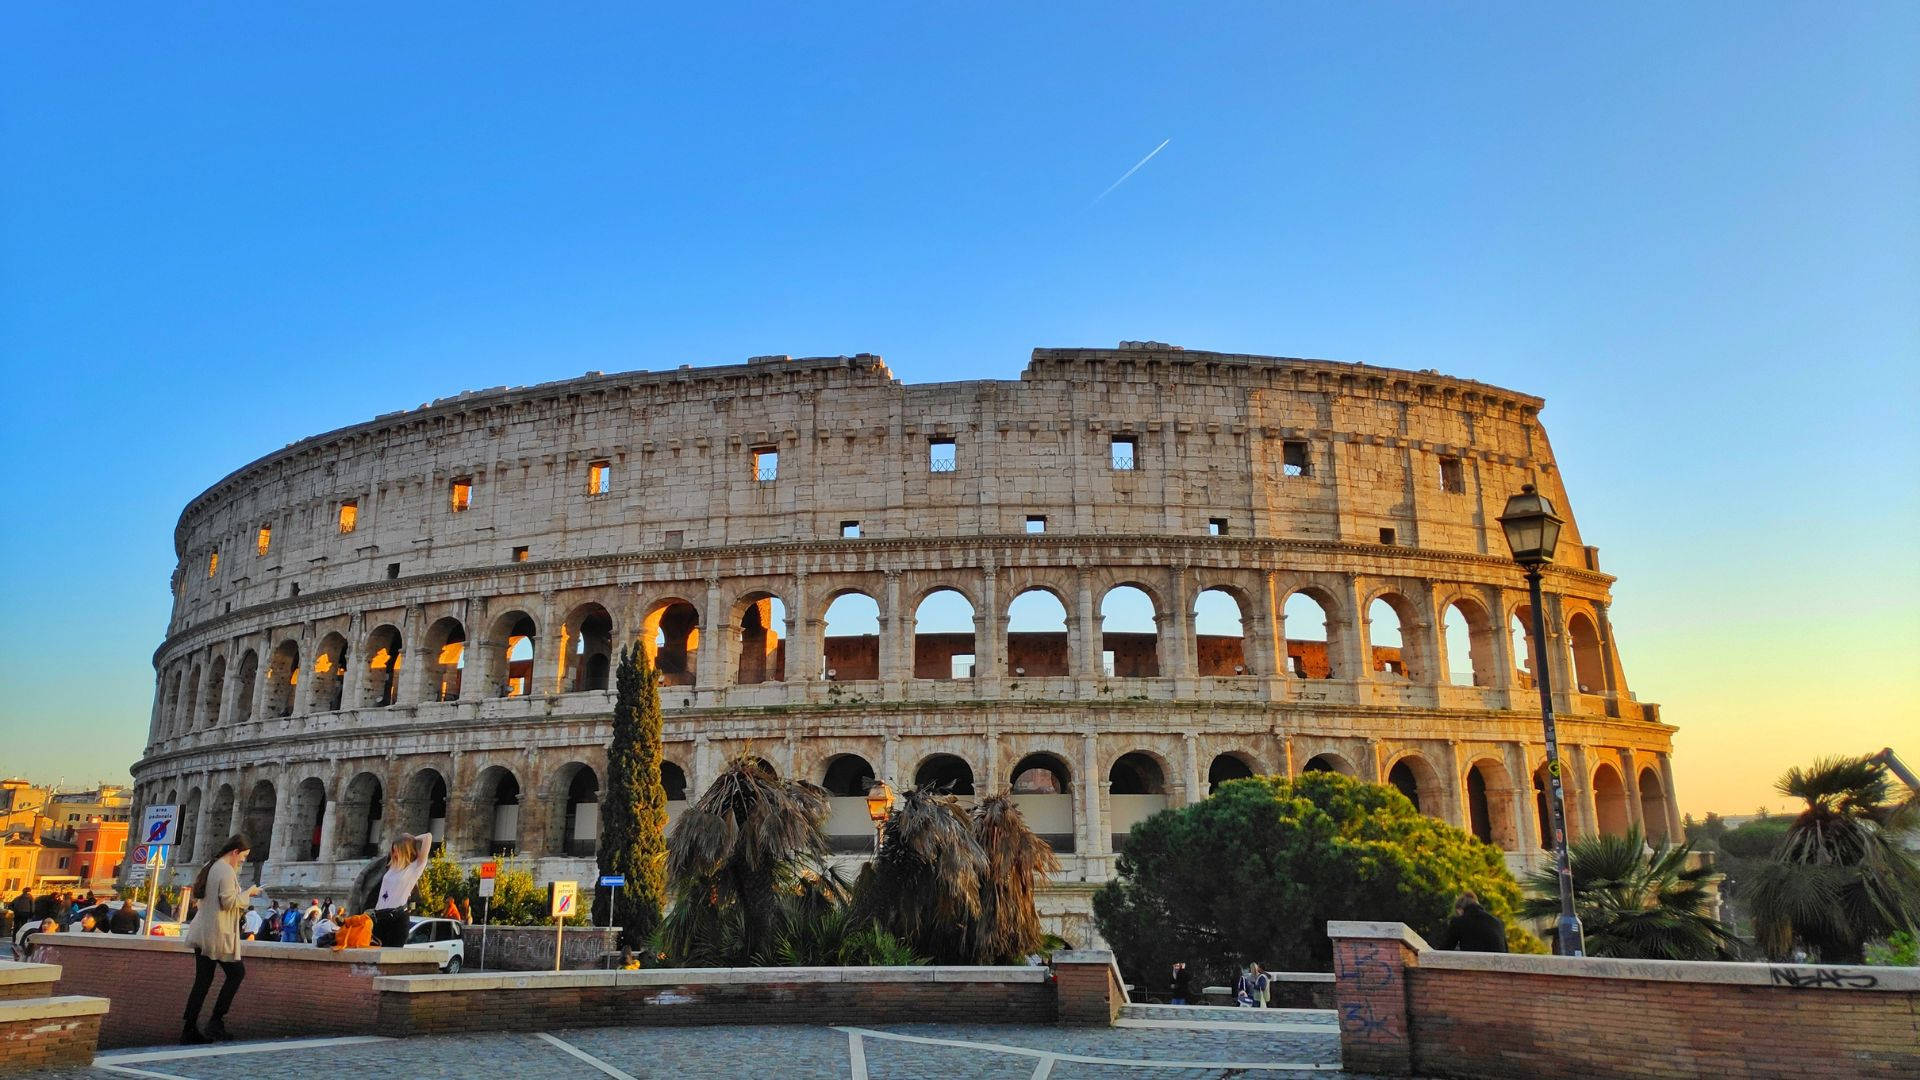 The Stunning Colosseum